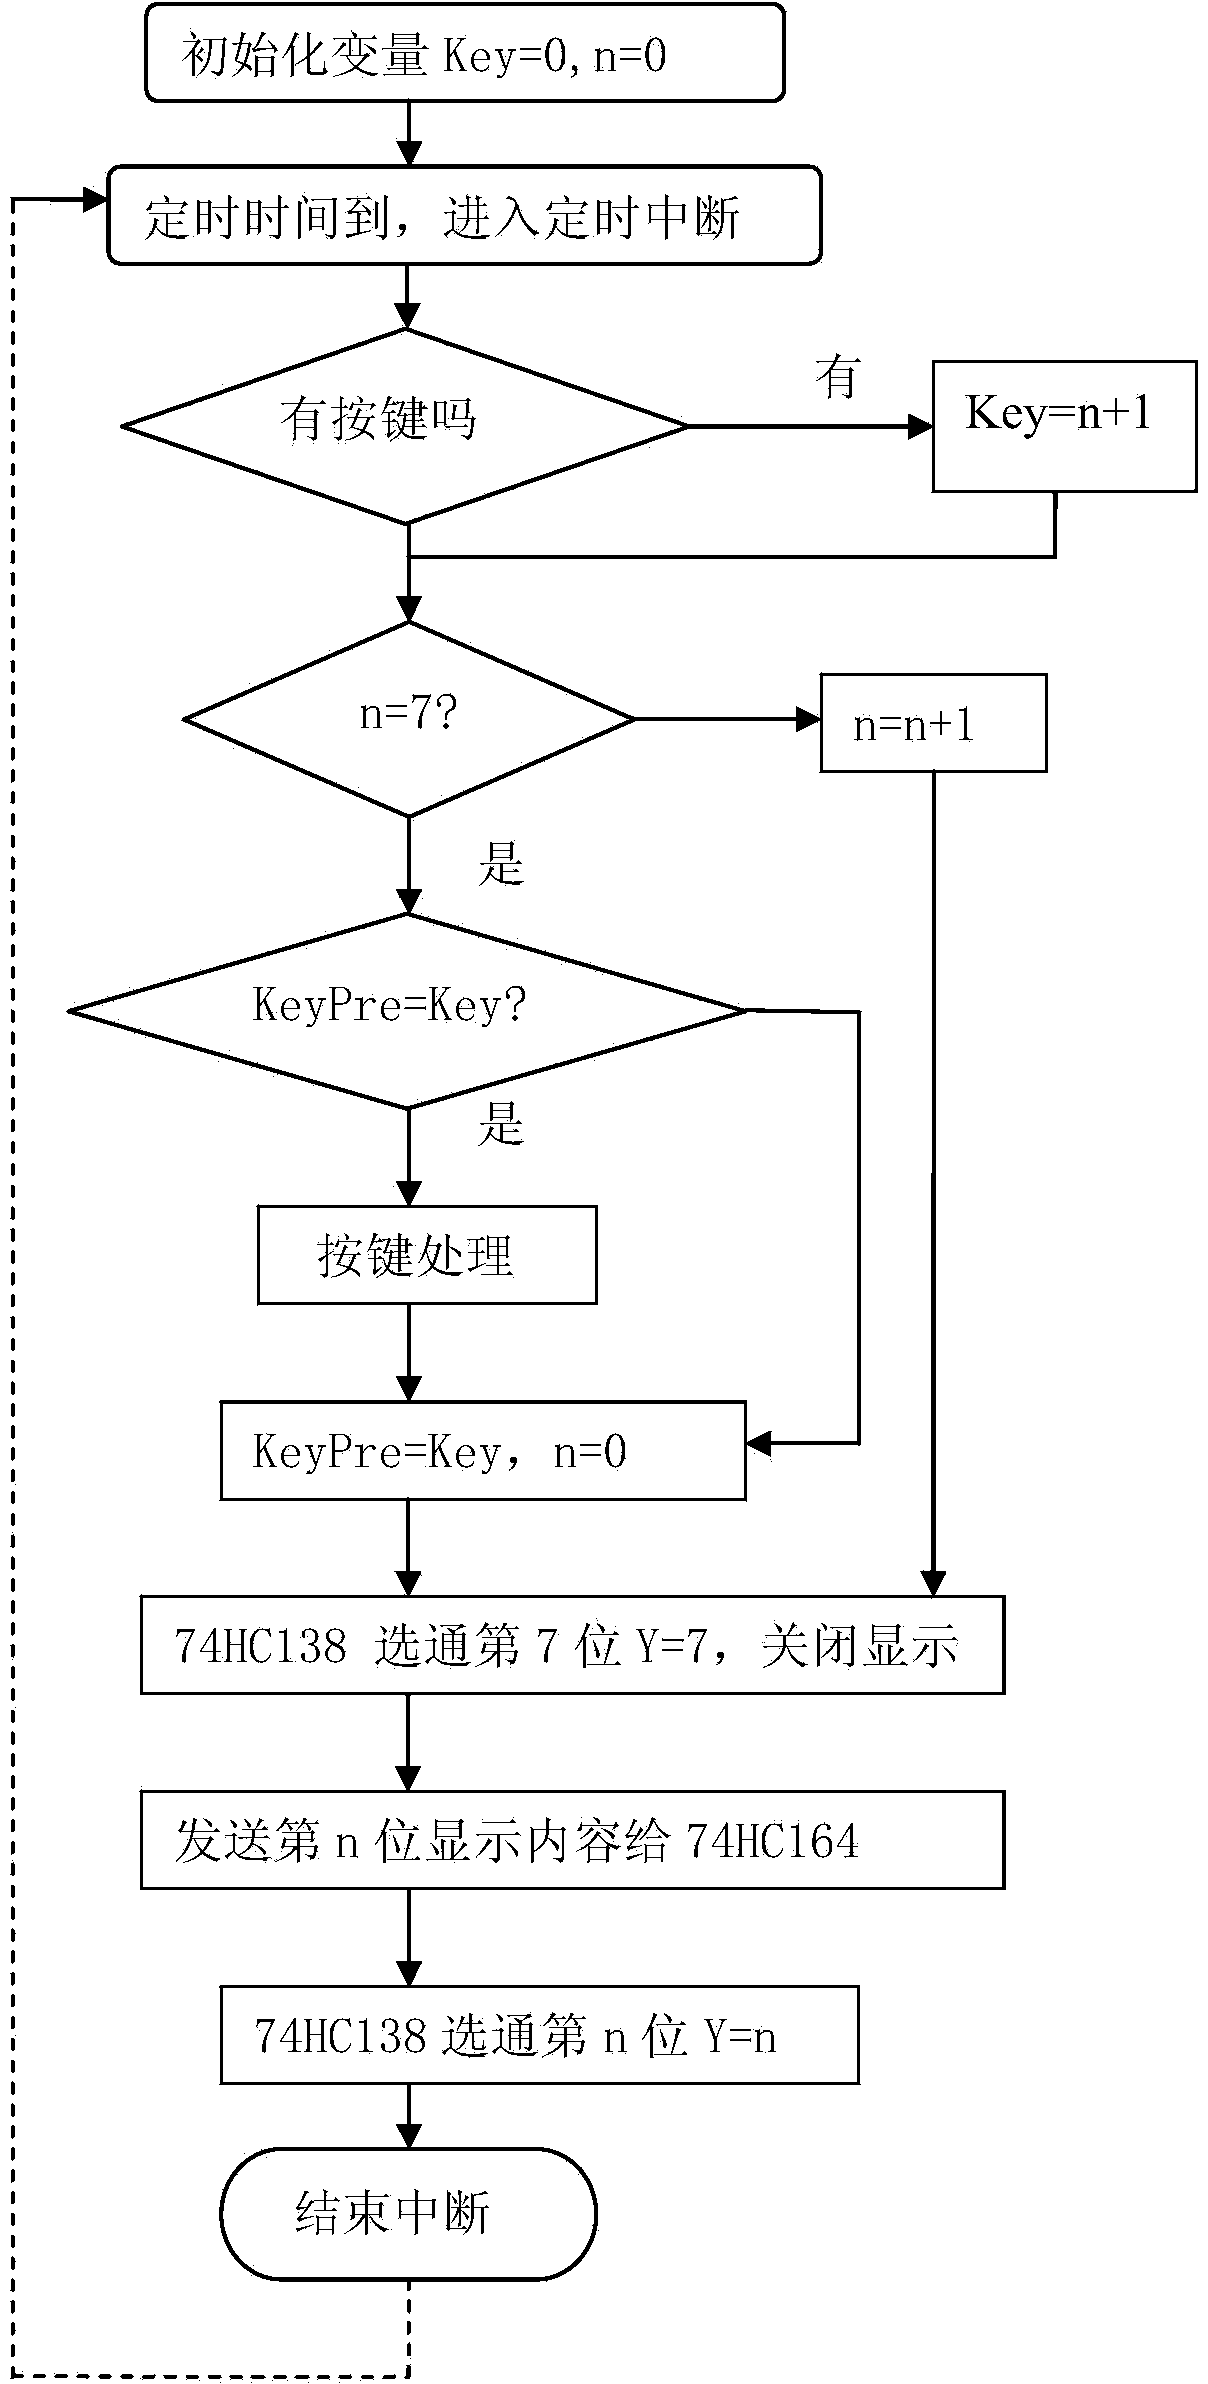 Nixie tube panel and key control circuit and control method thereof